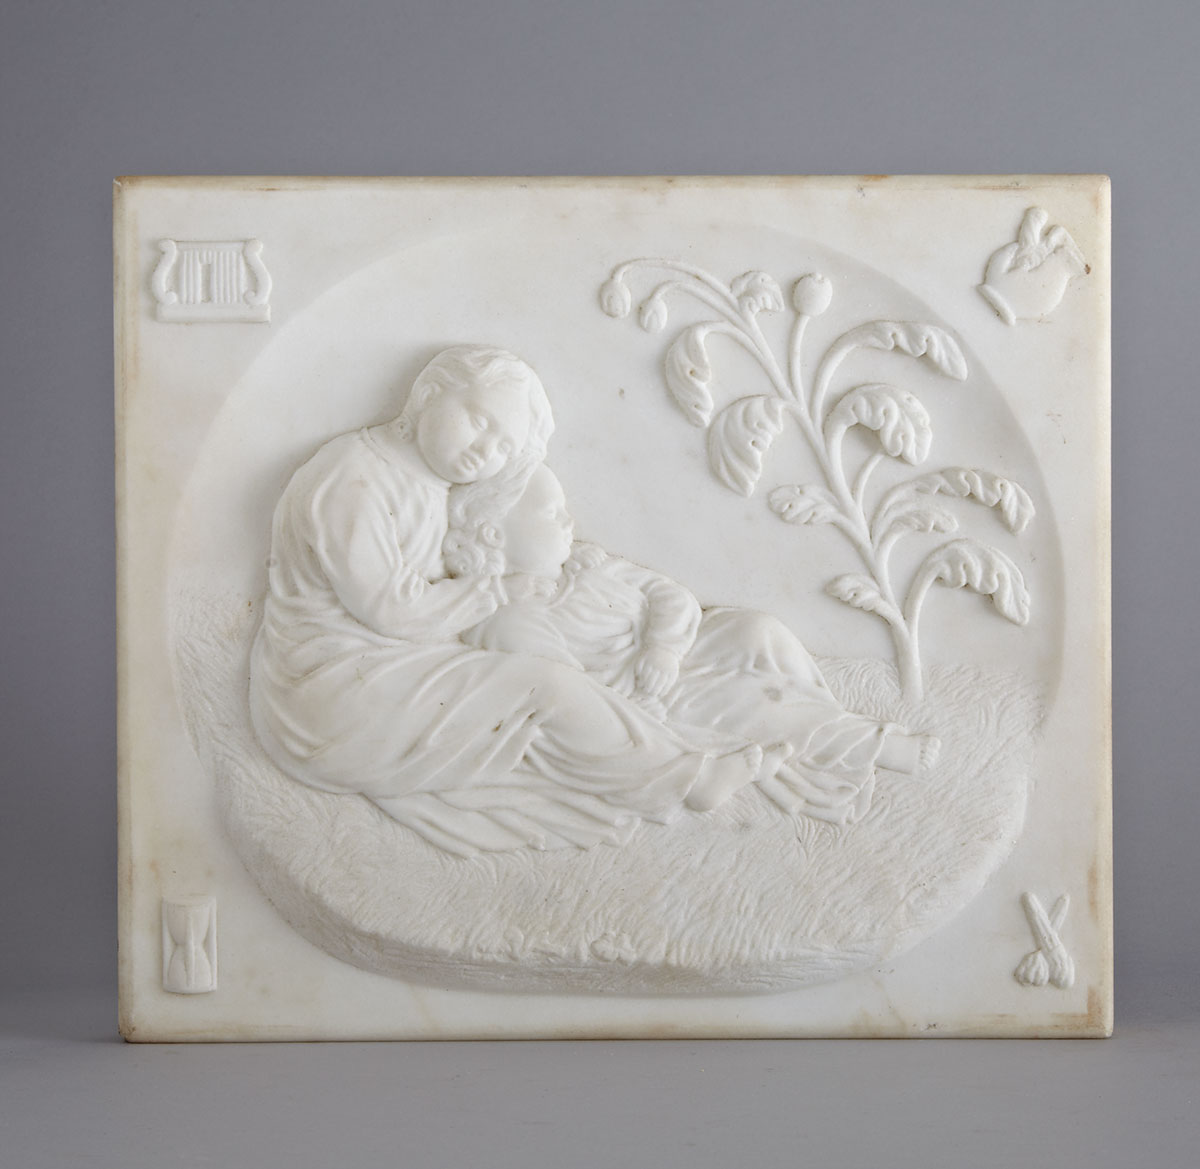 Victorian Memento Mori Relief Carved Marble Relief Plaque, 19th century